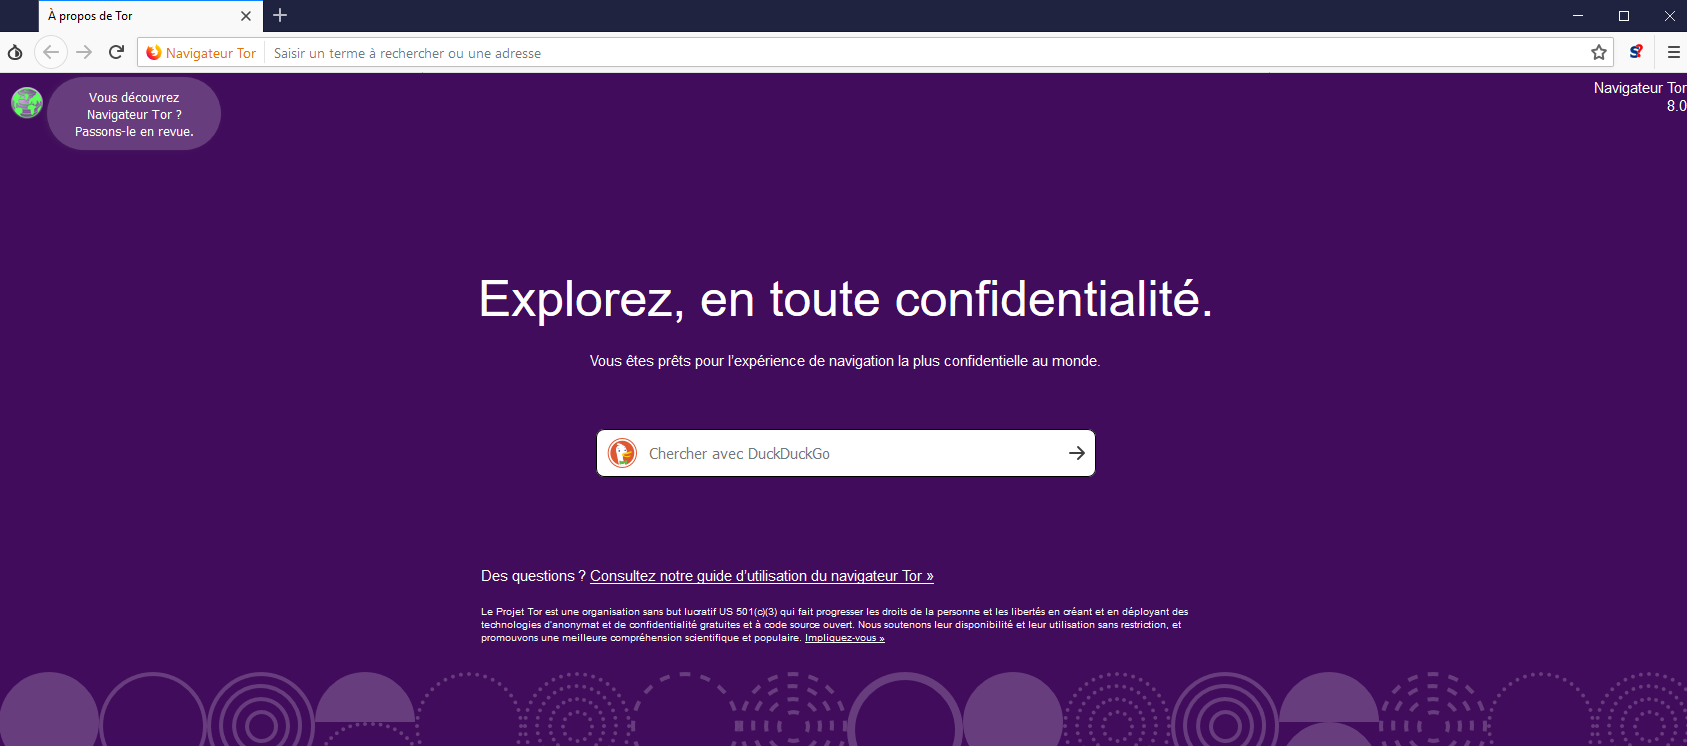 Tor browser videos mega интересный сайты в тор браузере megaruzxpnew4af